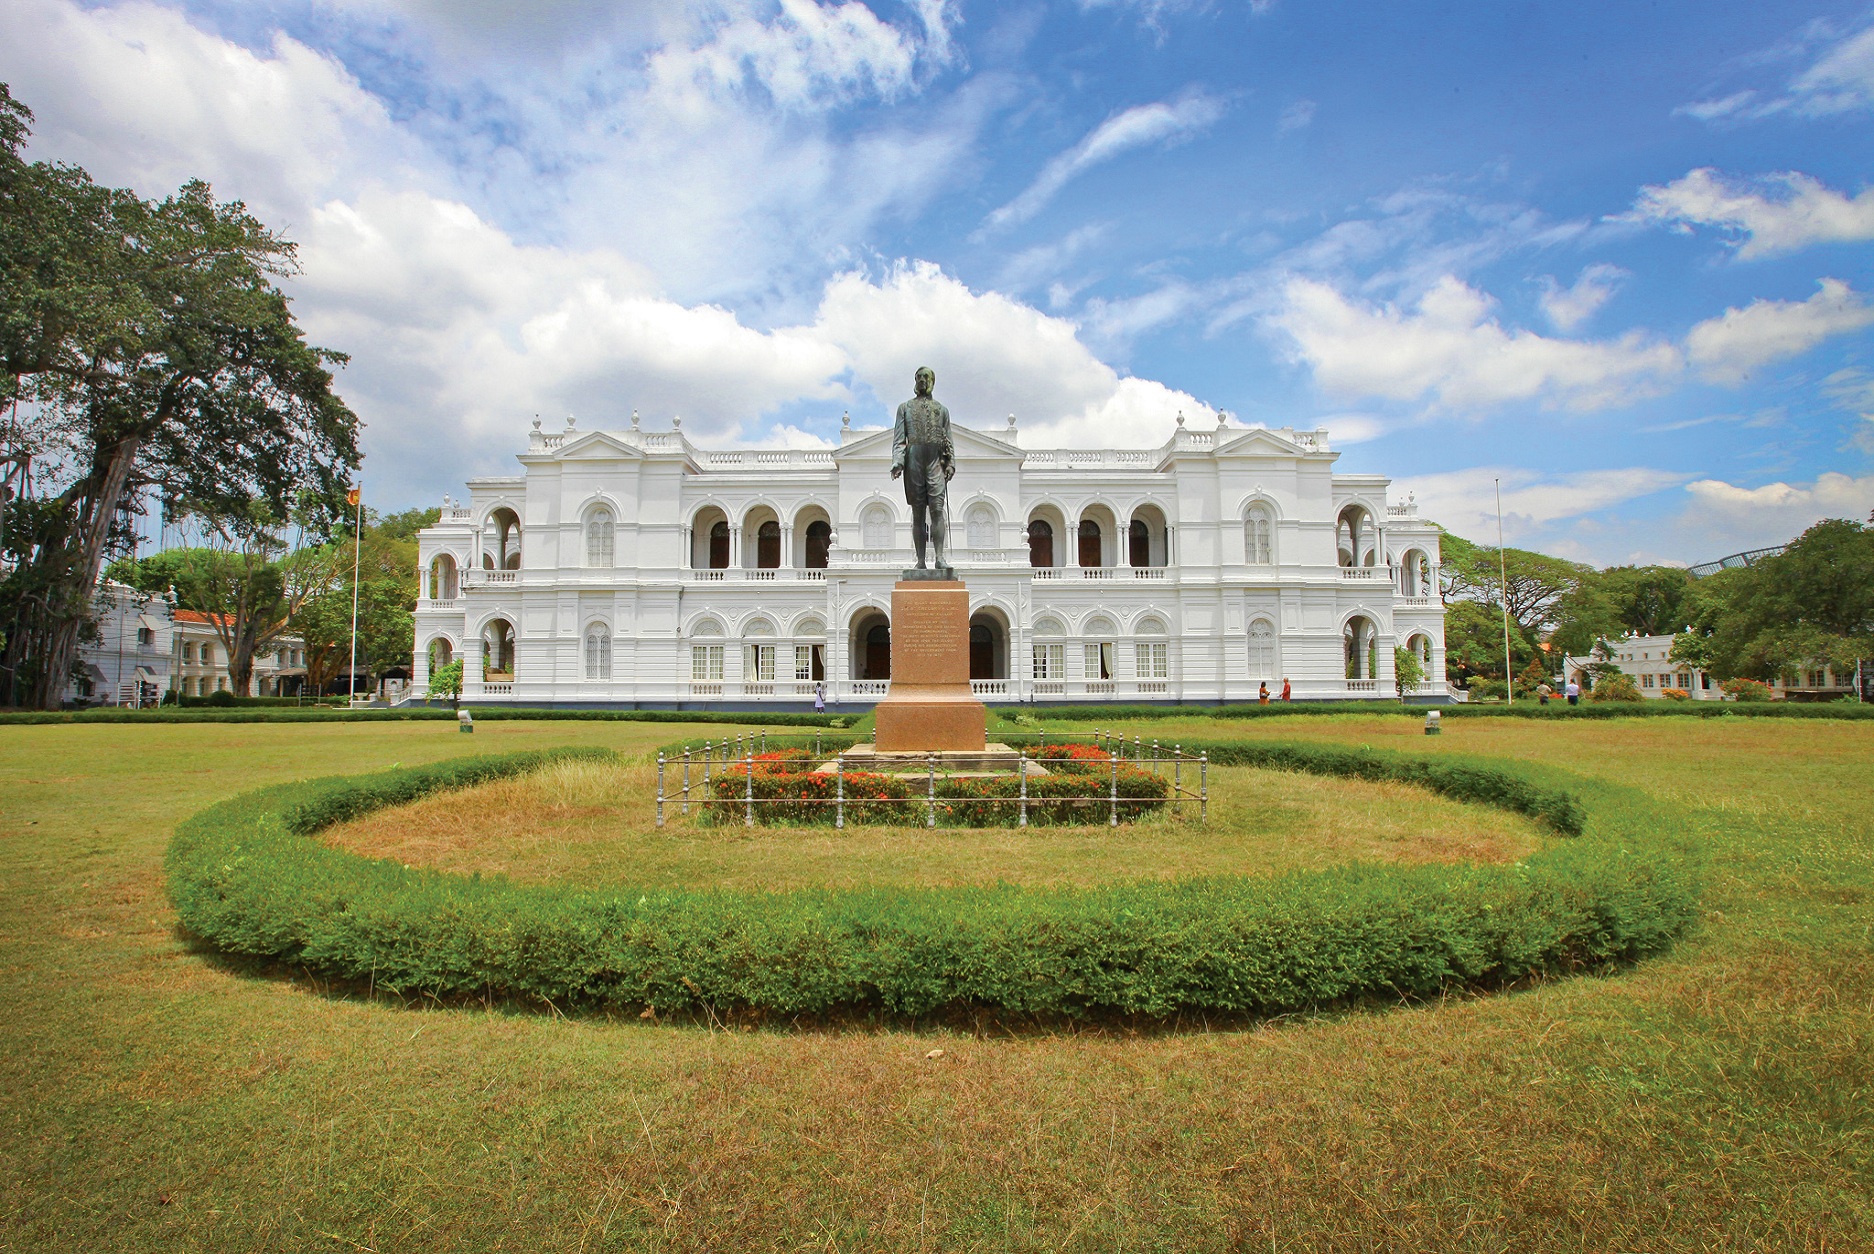 Sri lankan campus